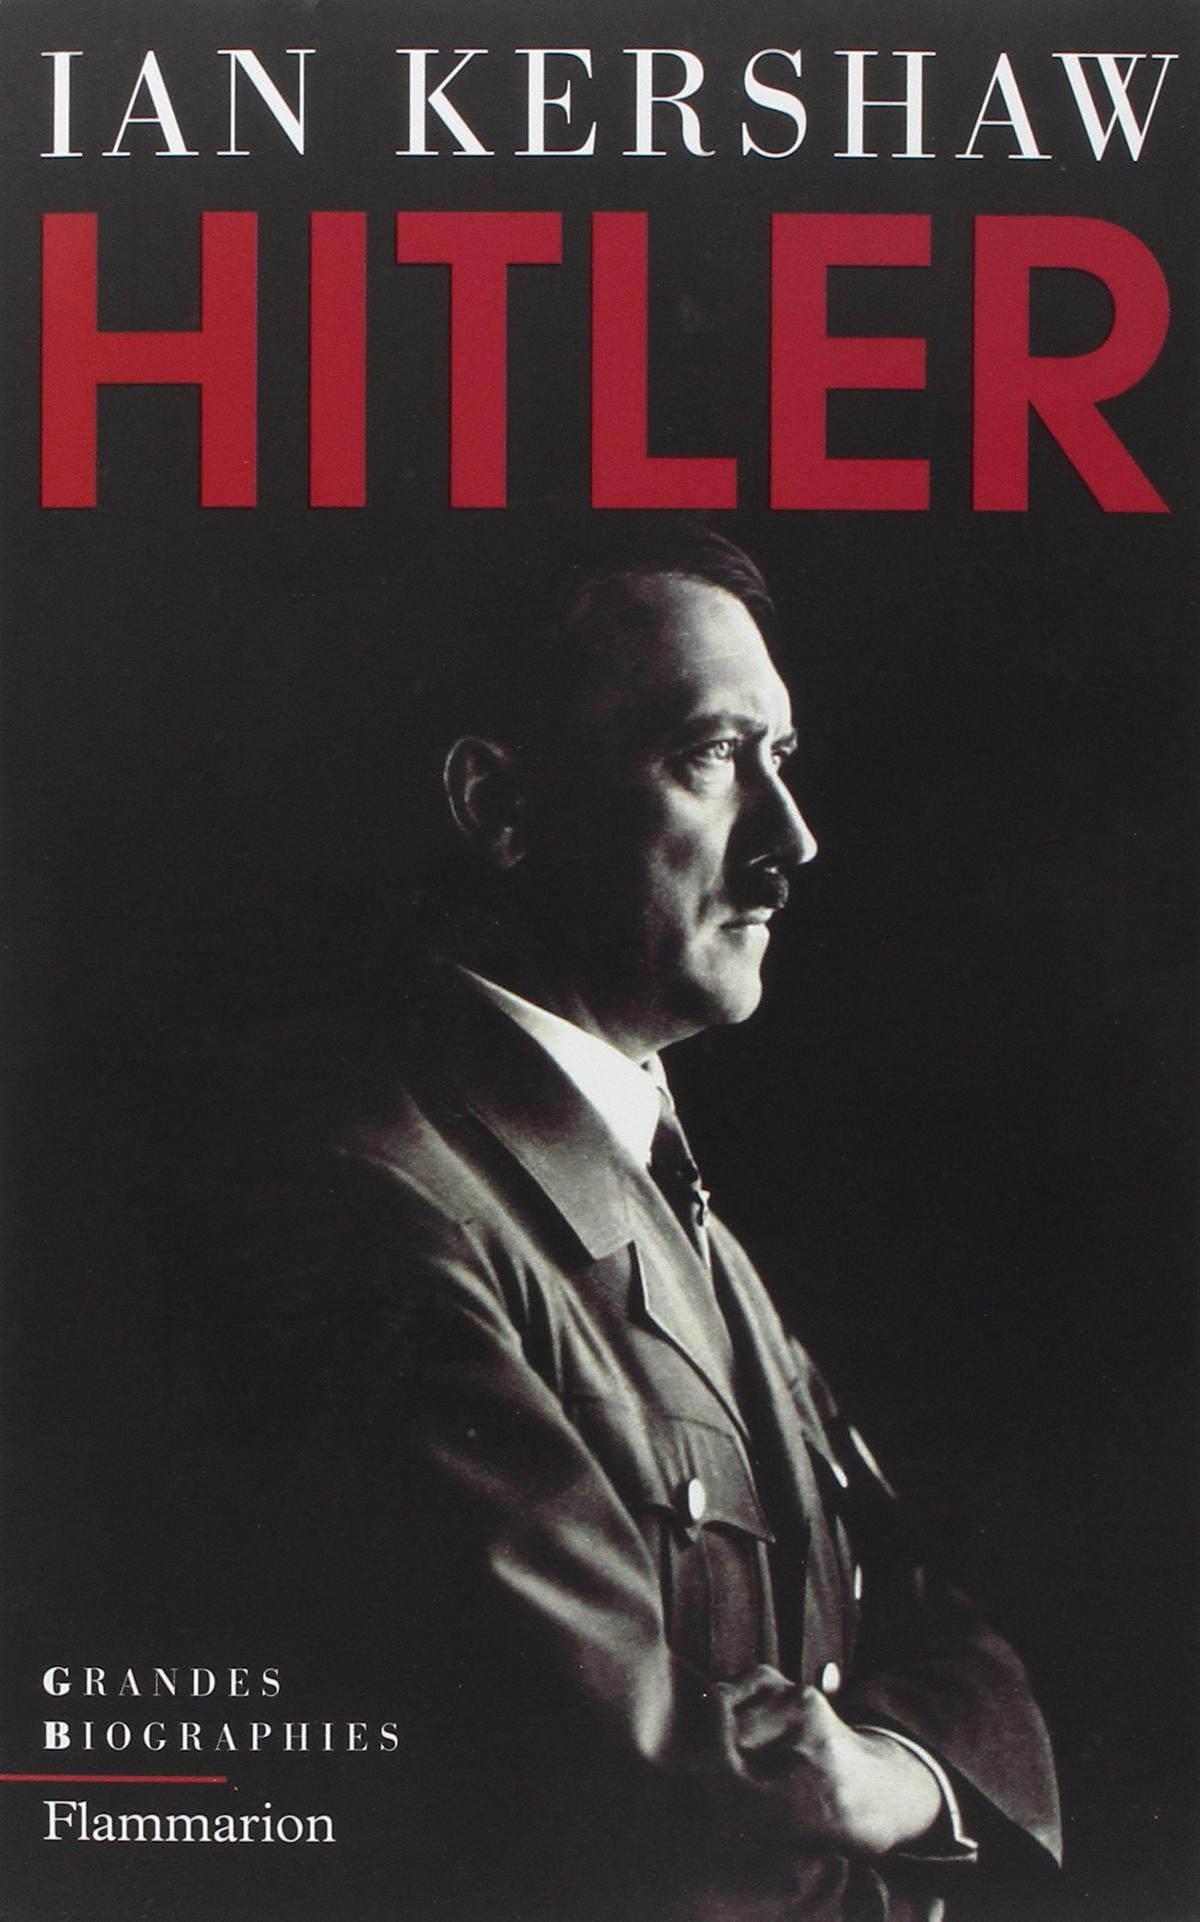 Hitler - Ian Kershaw - Grandes biographies.